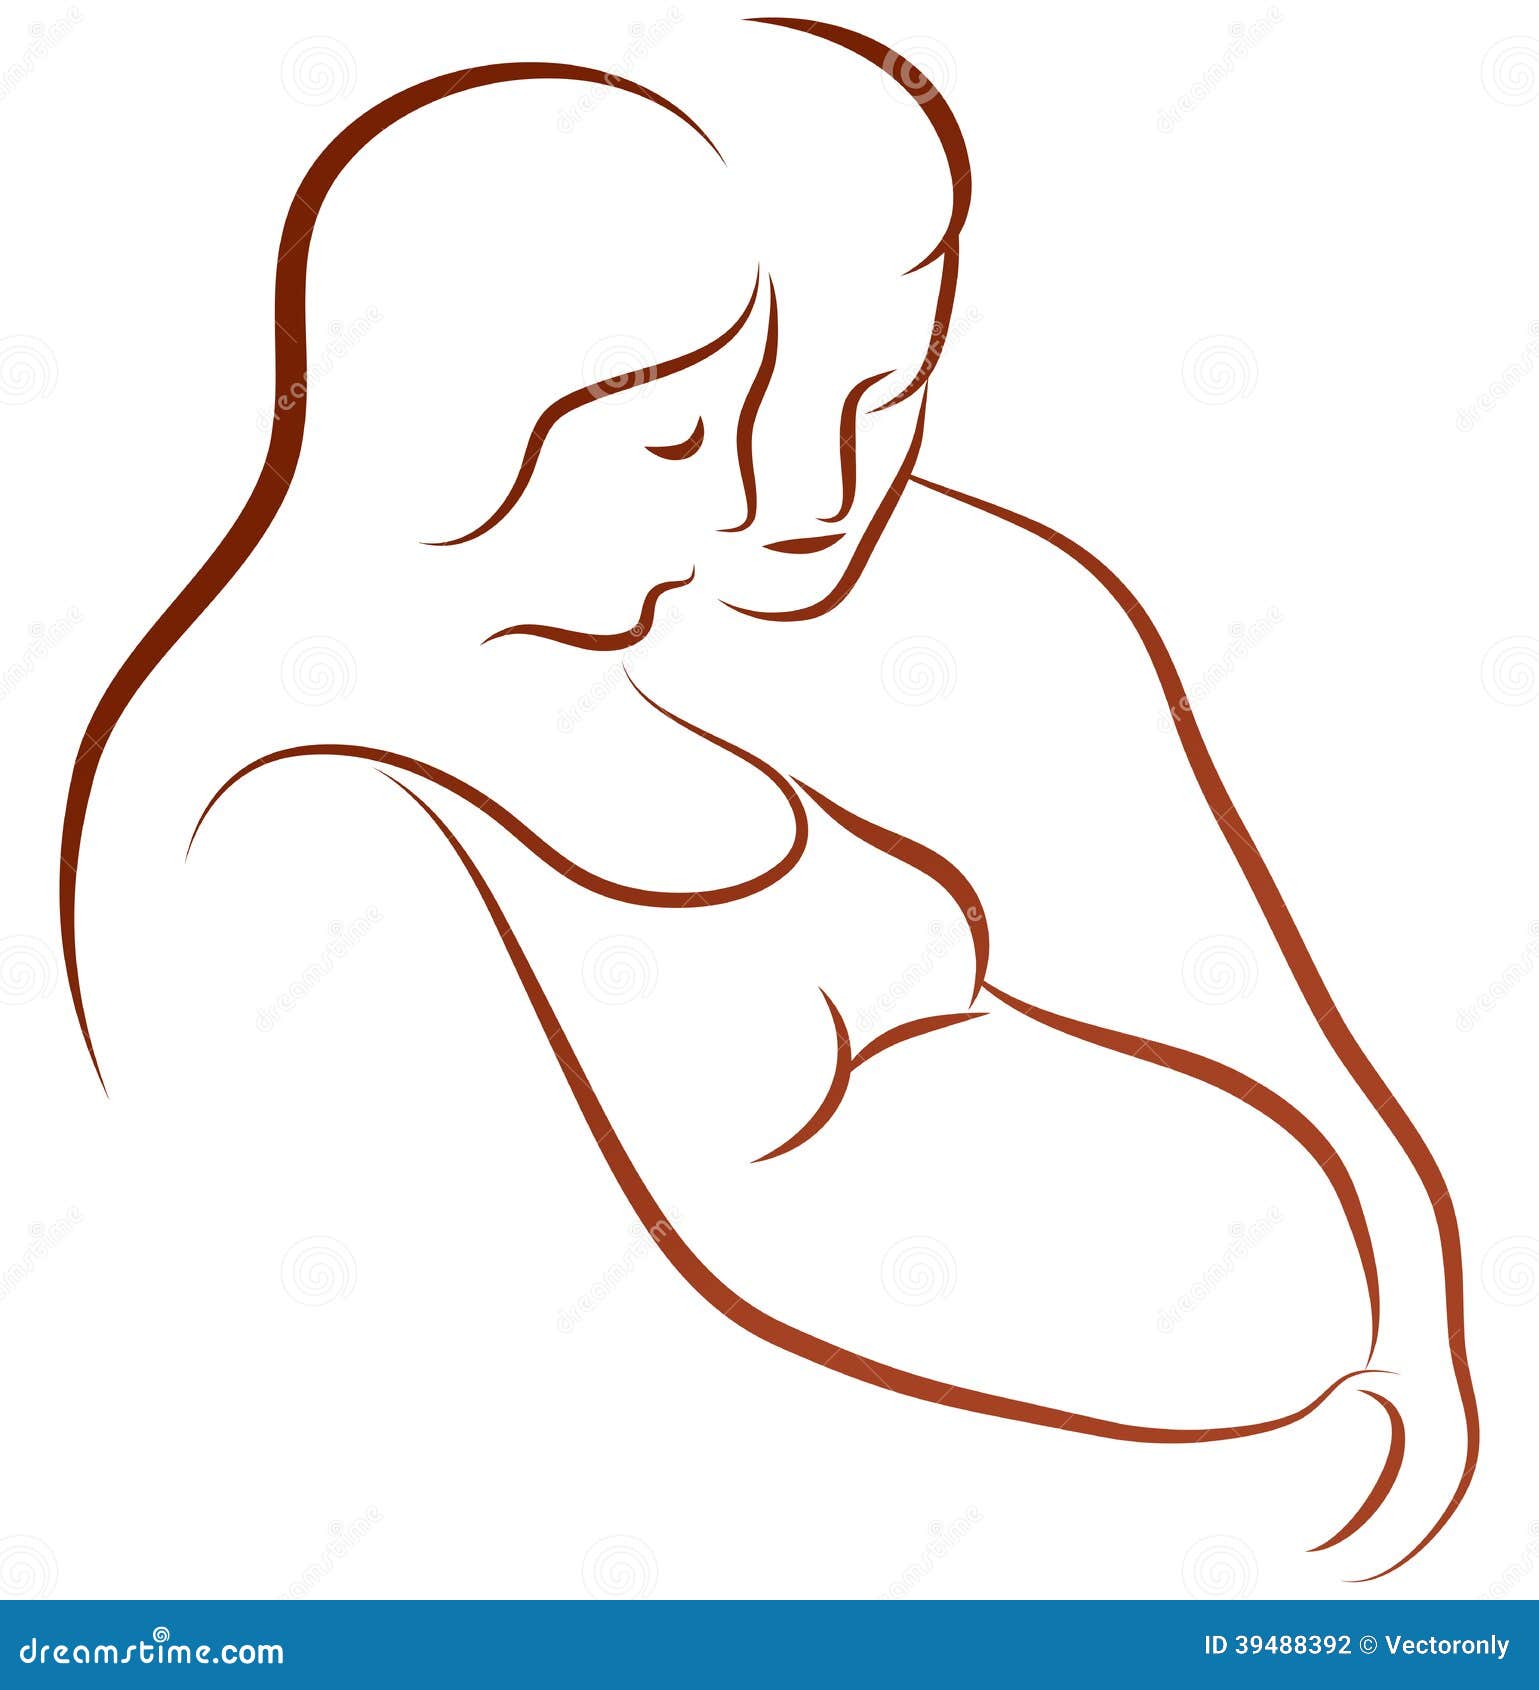 clip art free images pregnancy - photo #33